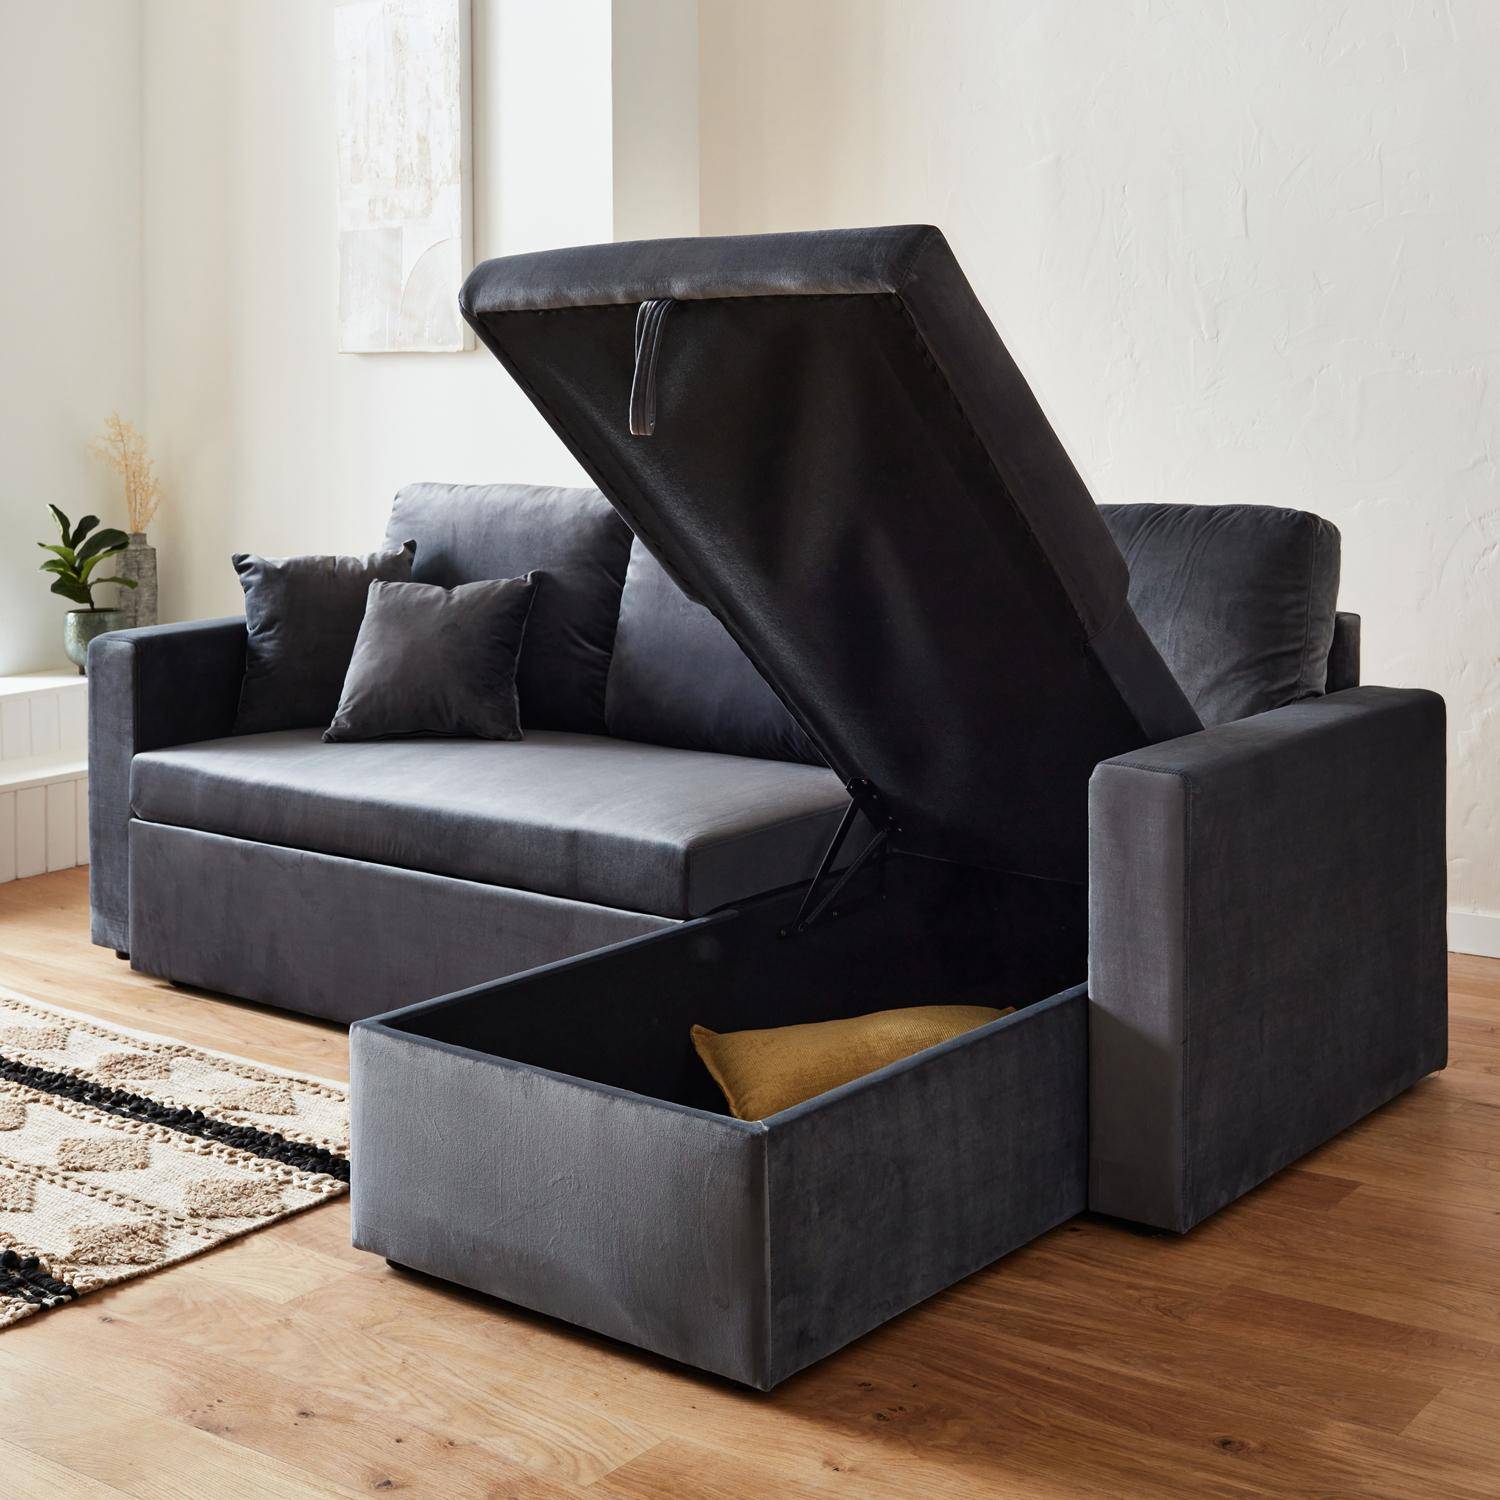 Dark grey velvet 3-seater convertible corner sofa, reversible corner armchair, storage box, modular bed,sweeek,Photo2